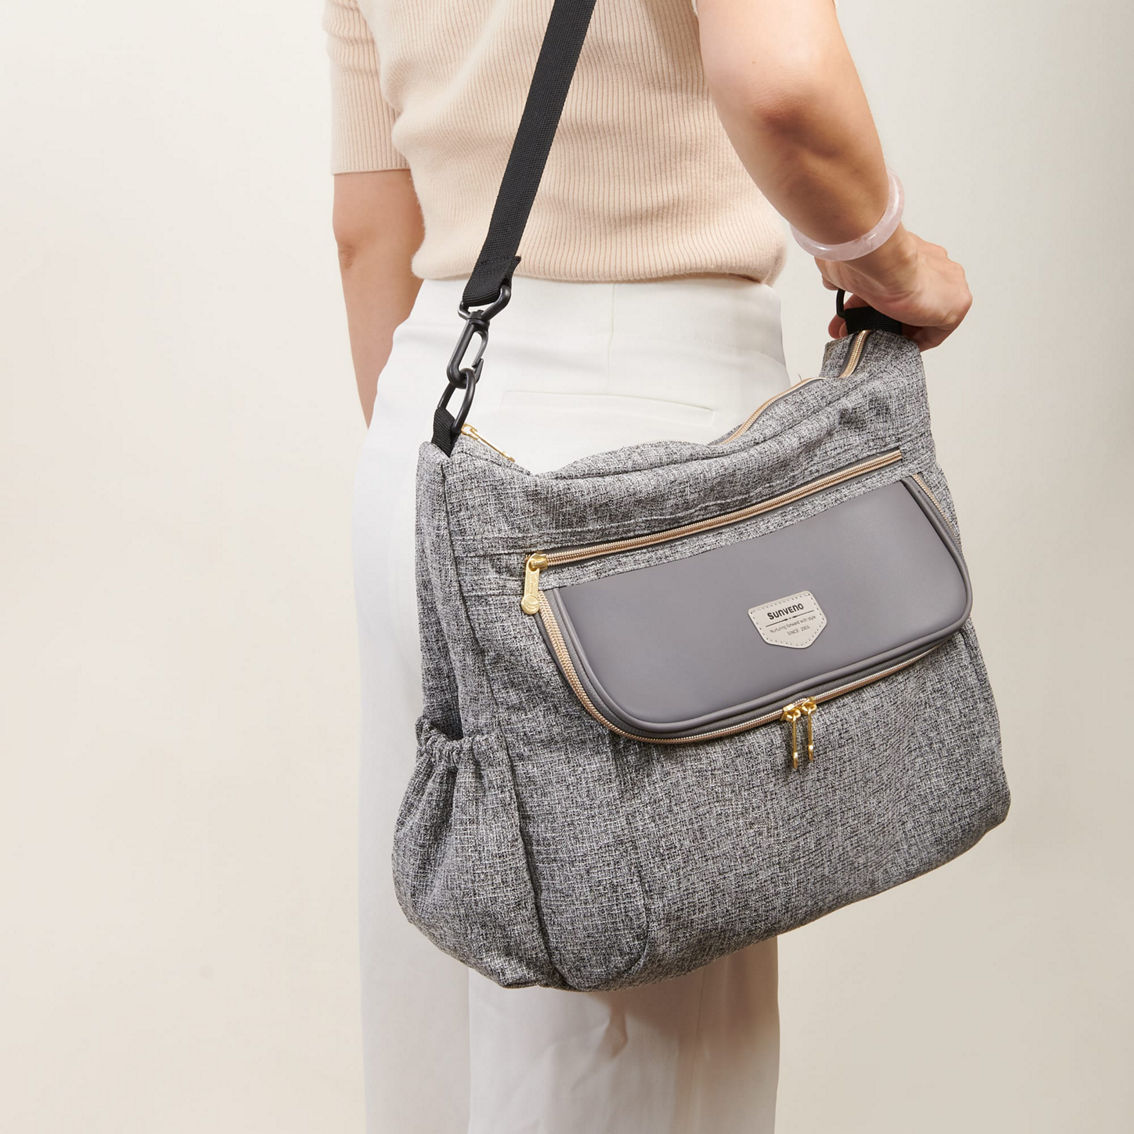 Sunveno Tweed Luxe Stroller Organizer Diaper Bag, Gray - Image 5 of 5